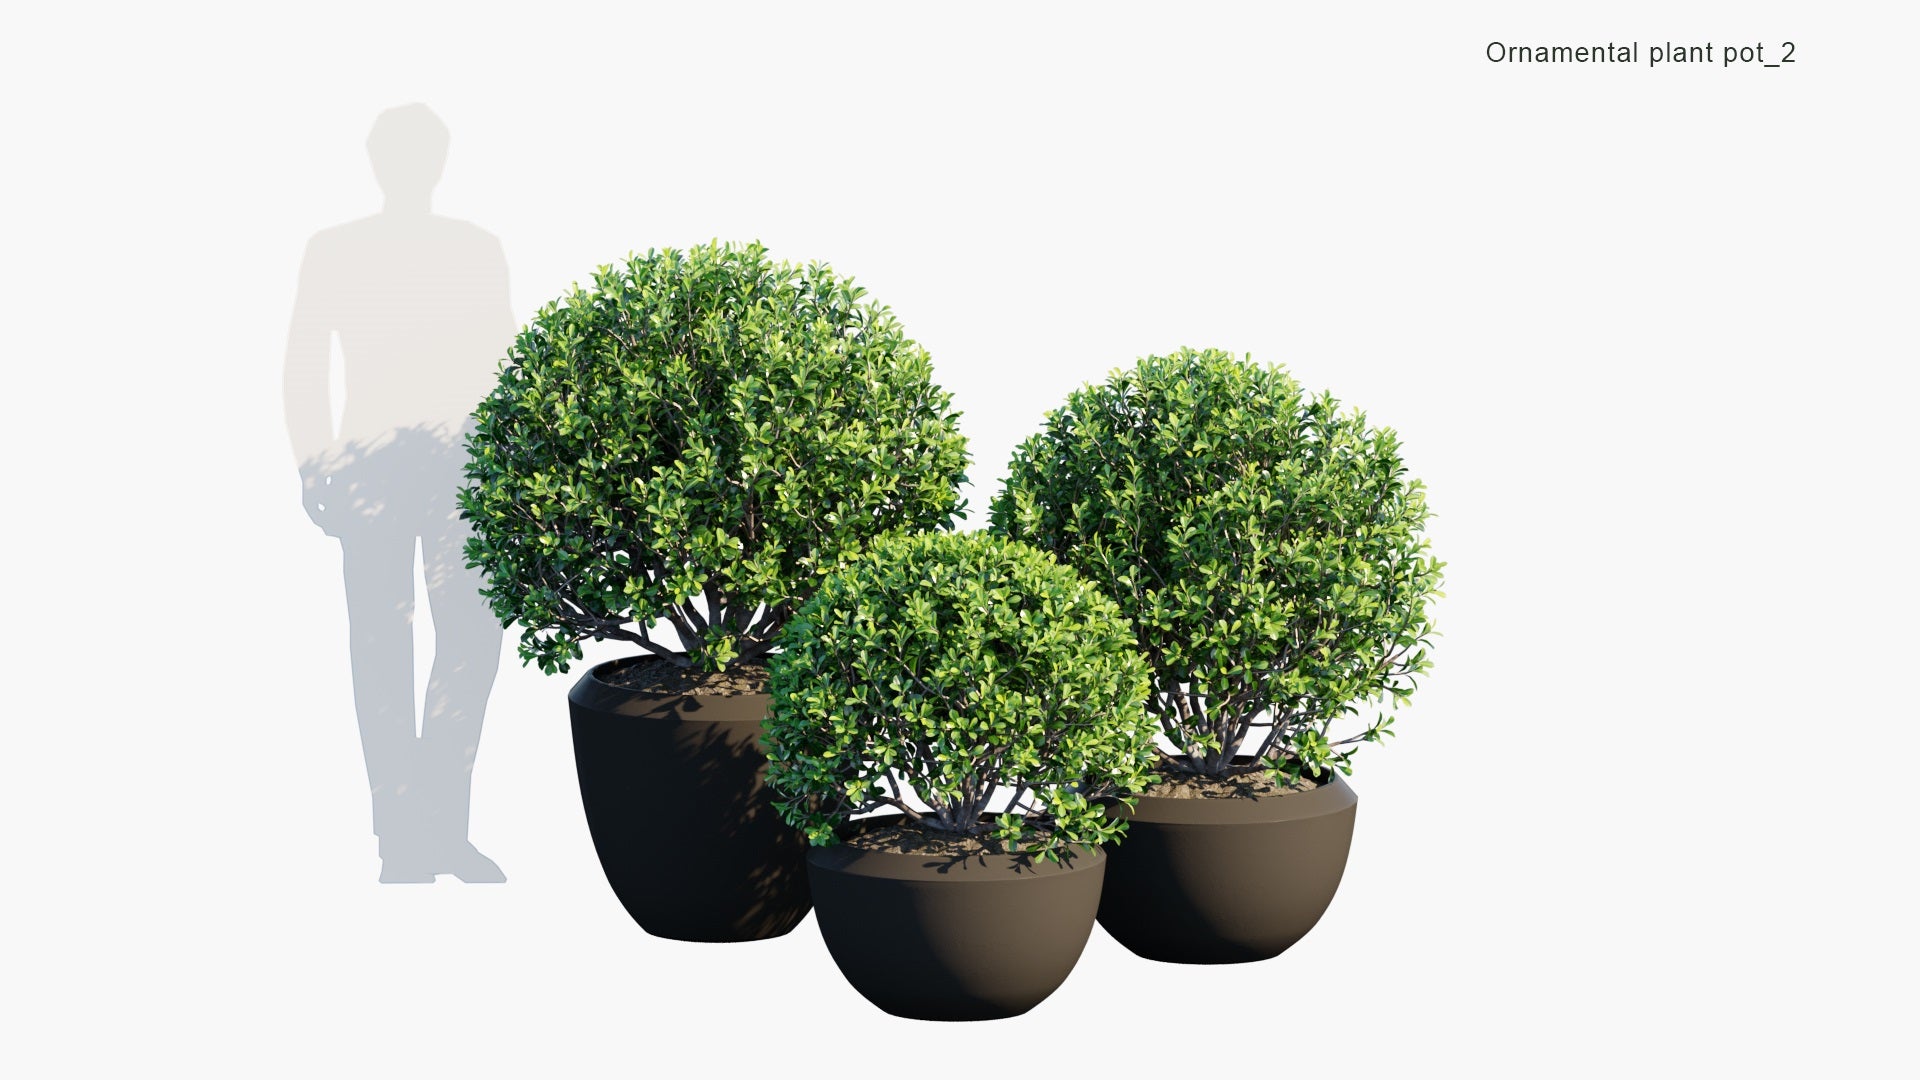 Ornamental Pot Plant 02 - Pittosporum Tobira (3D Model)